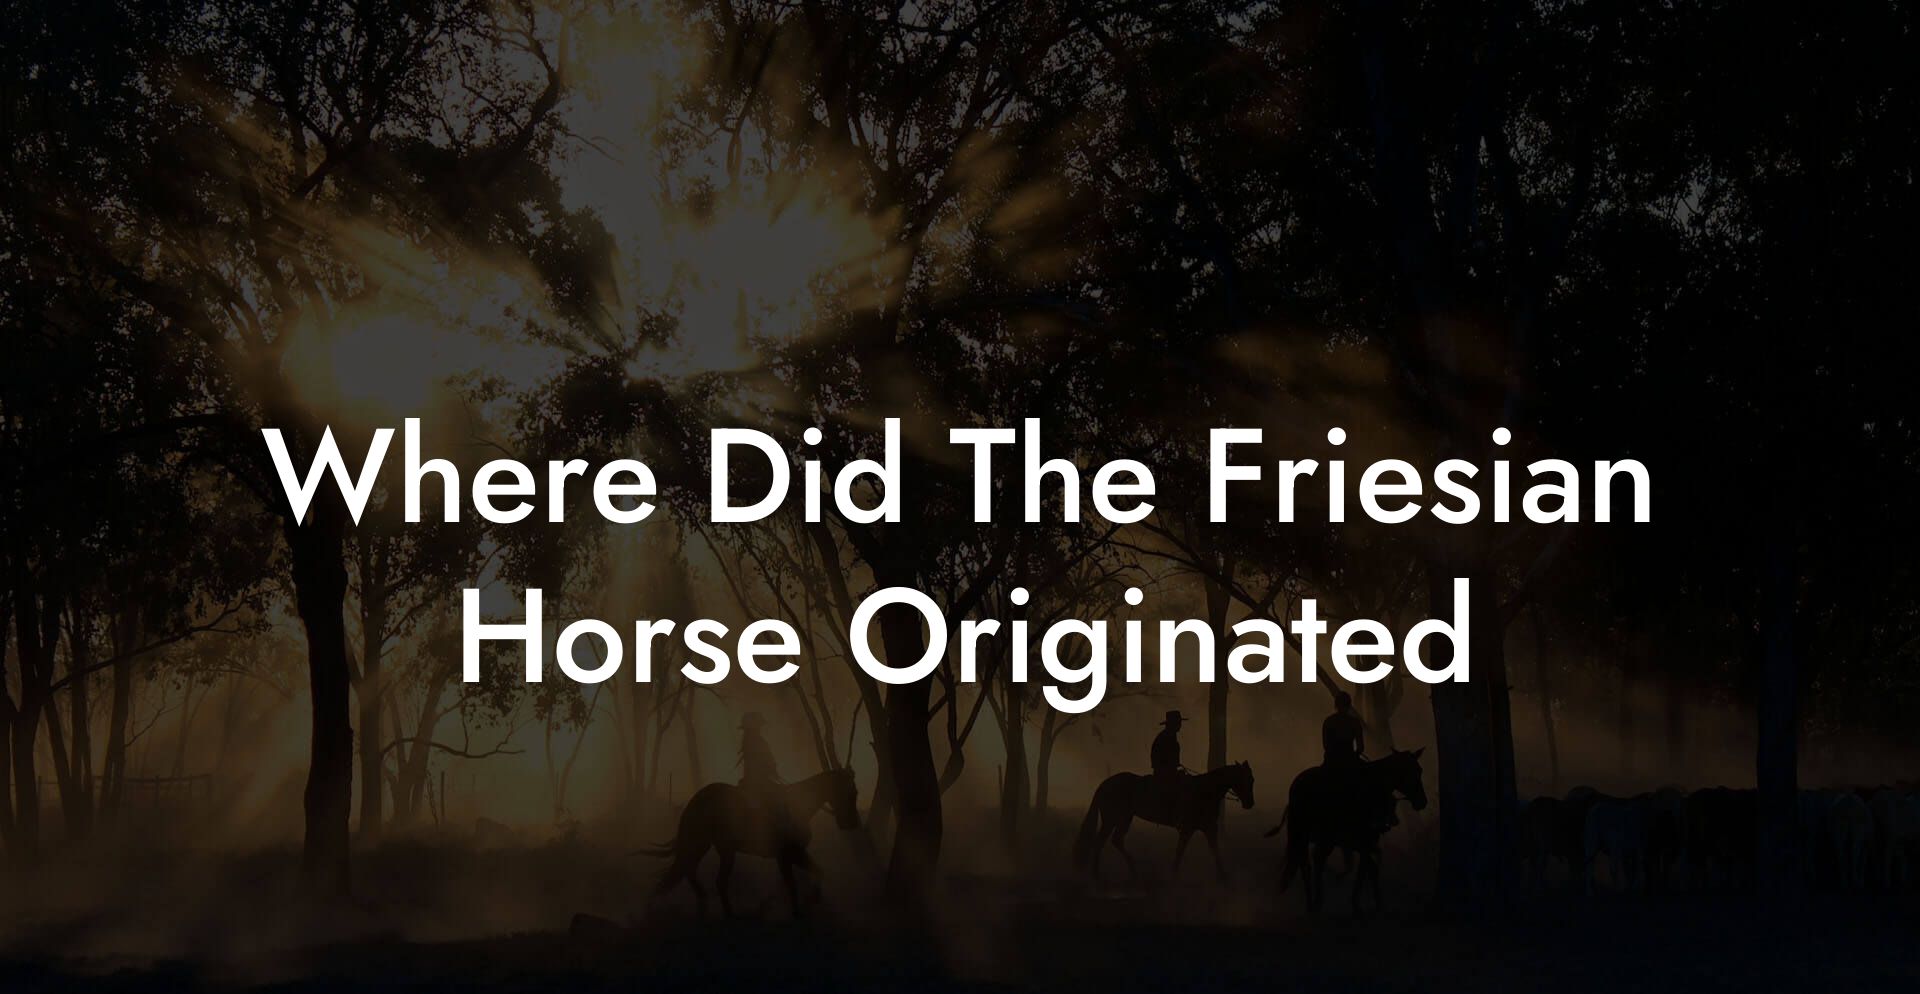 Where Did The Friesian Horse Originated